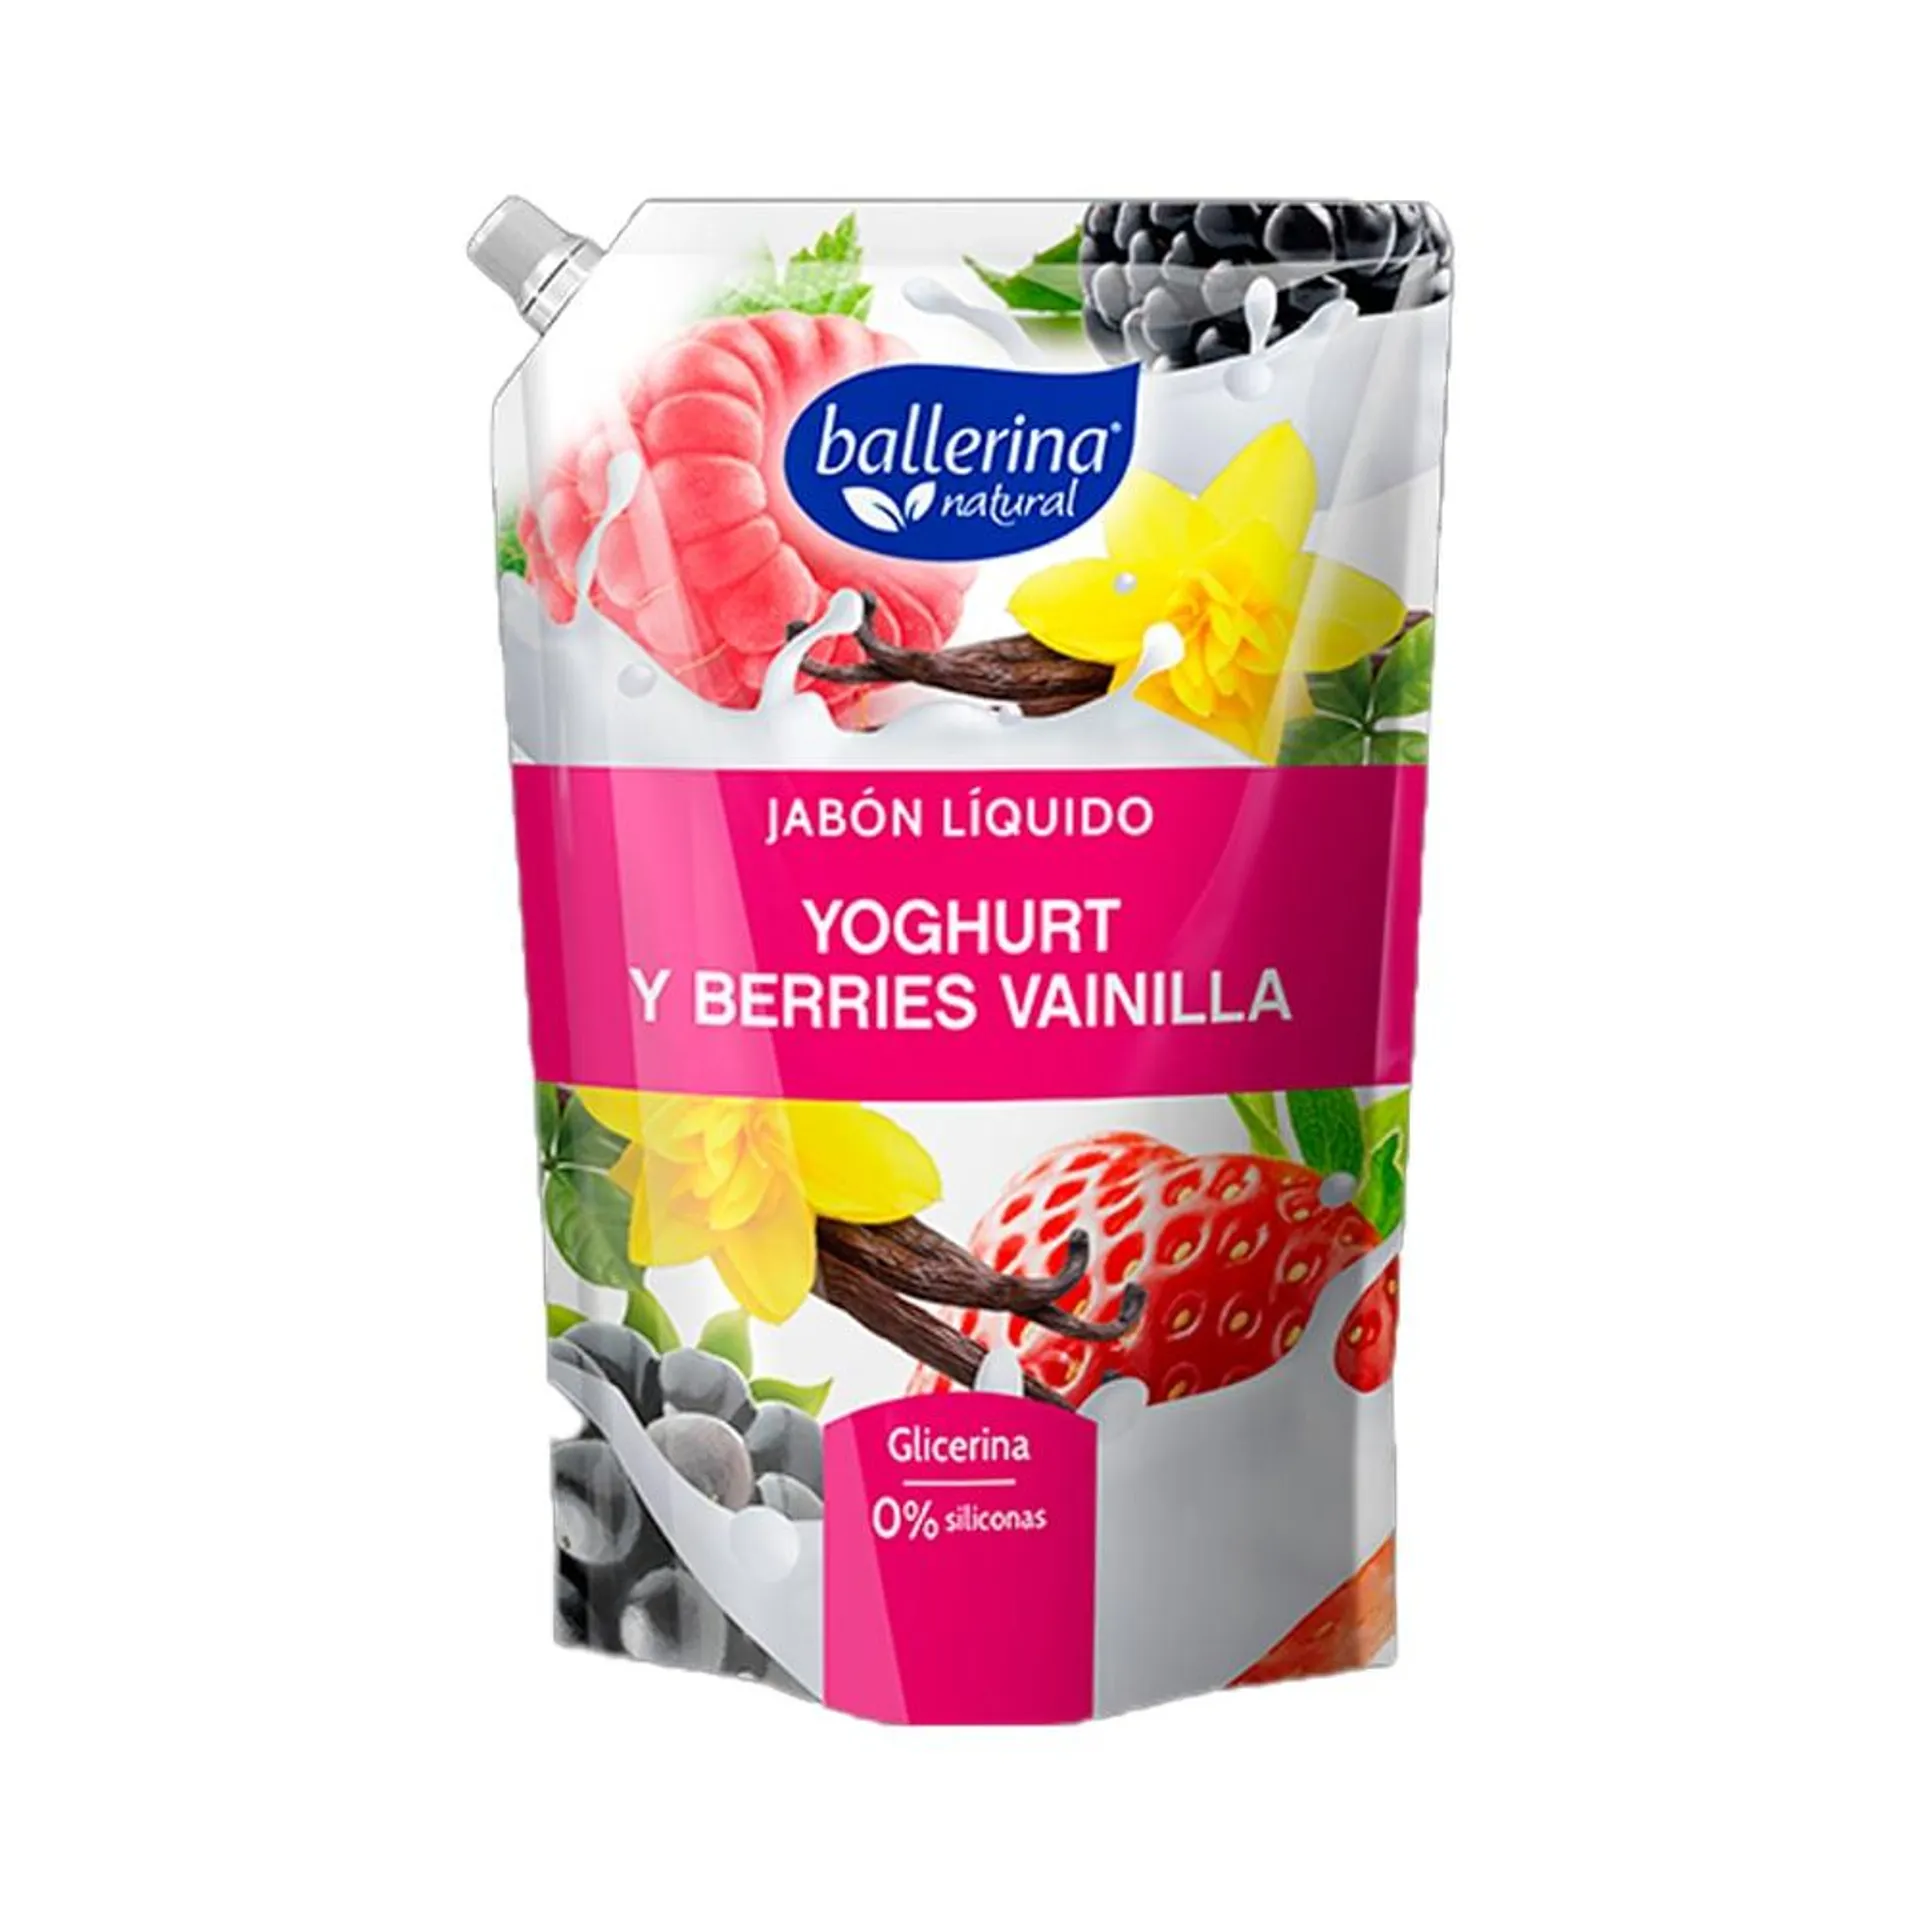 Jabon Ballerina Yoghurt y Berries Vainilla Dp 750 ml